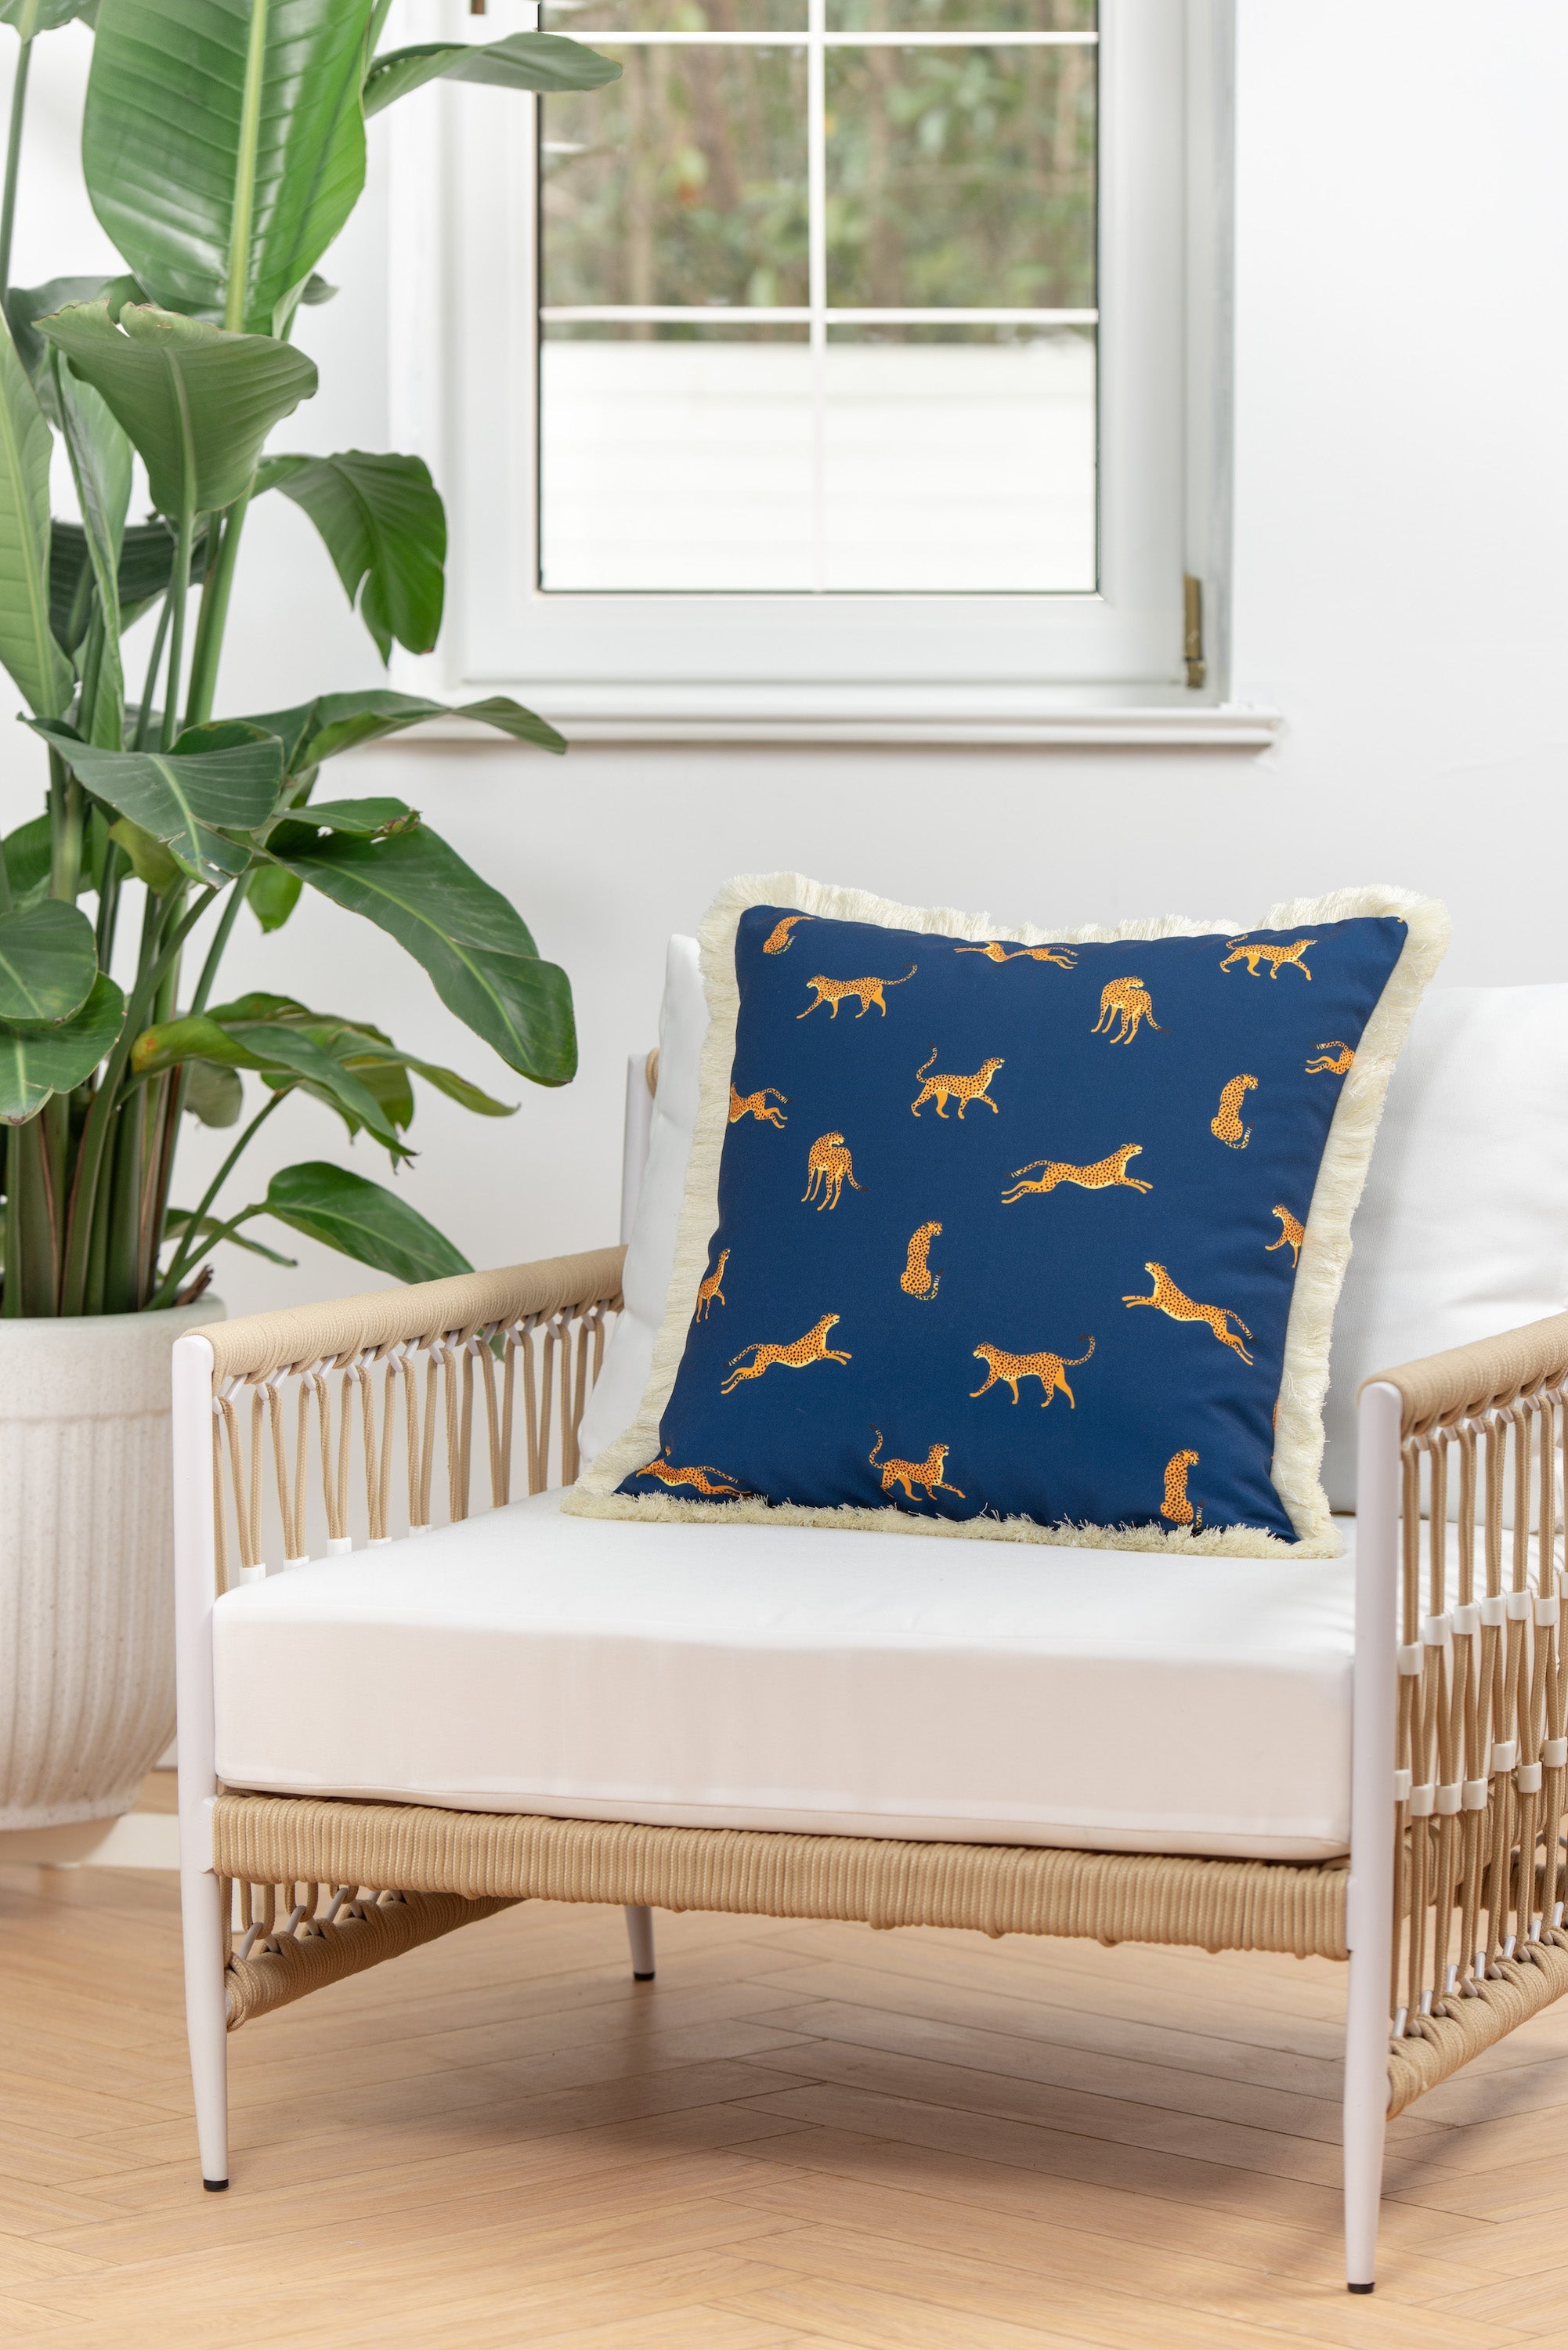 Tropical Indoor Outdoor Pillow Cover, Leopard Fringe, Navy Blue, 20"x20"